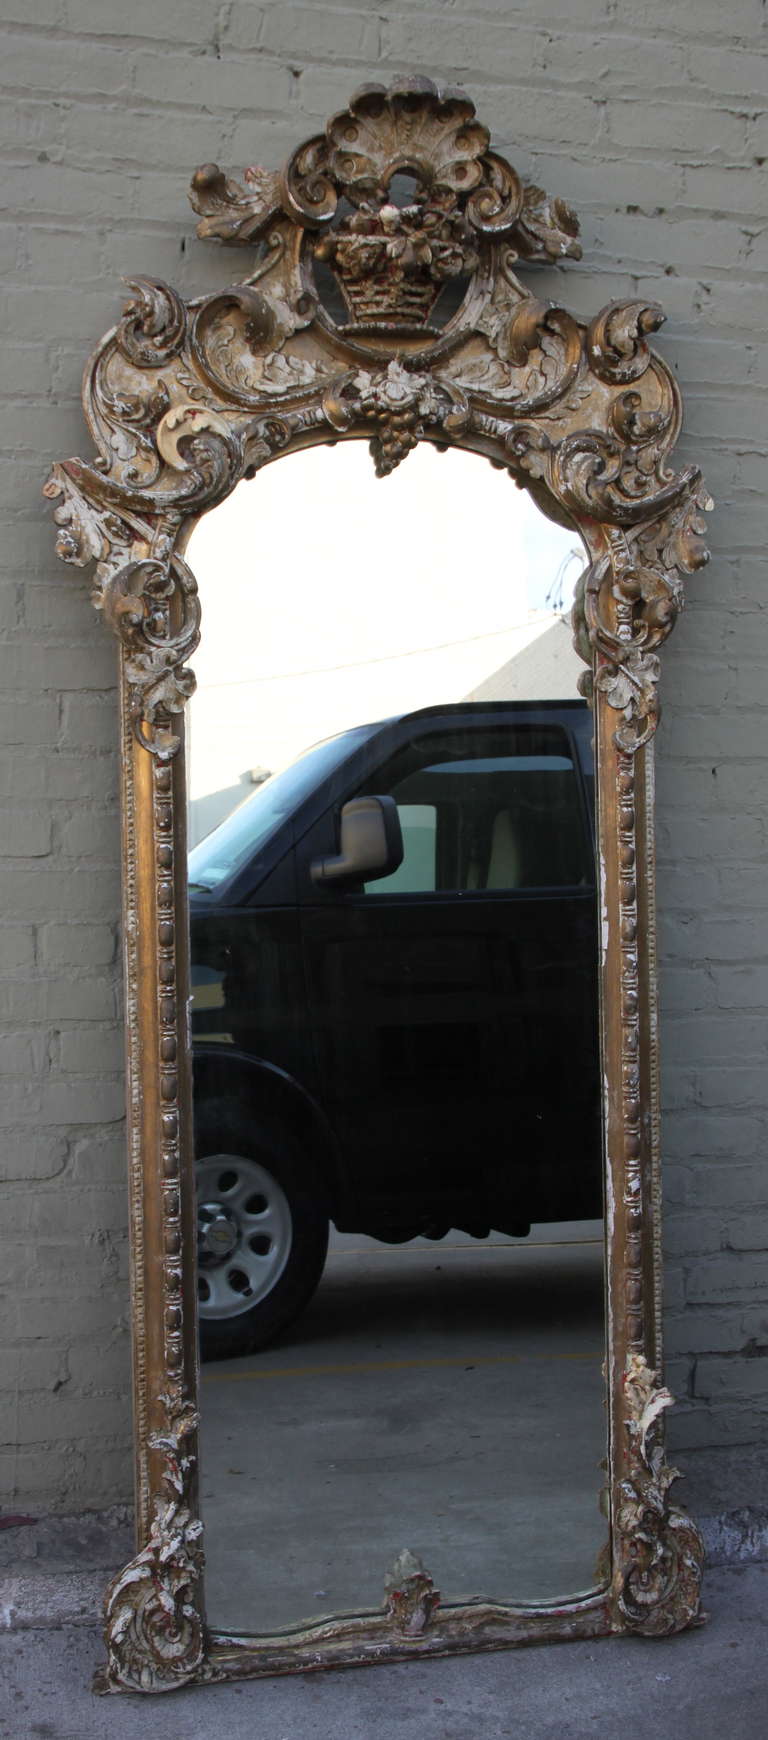 19th century Italian gold gilt mirror with distressed finish.